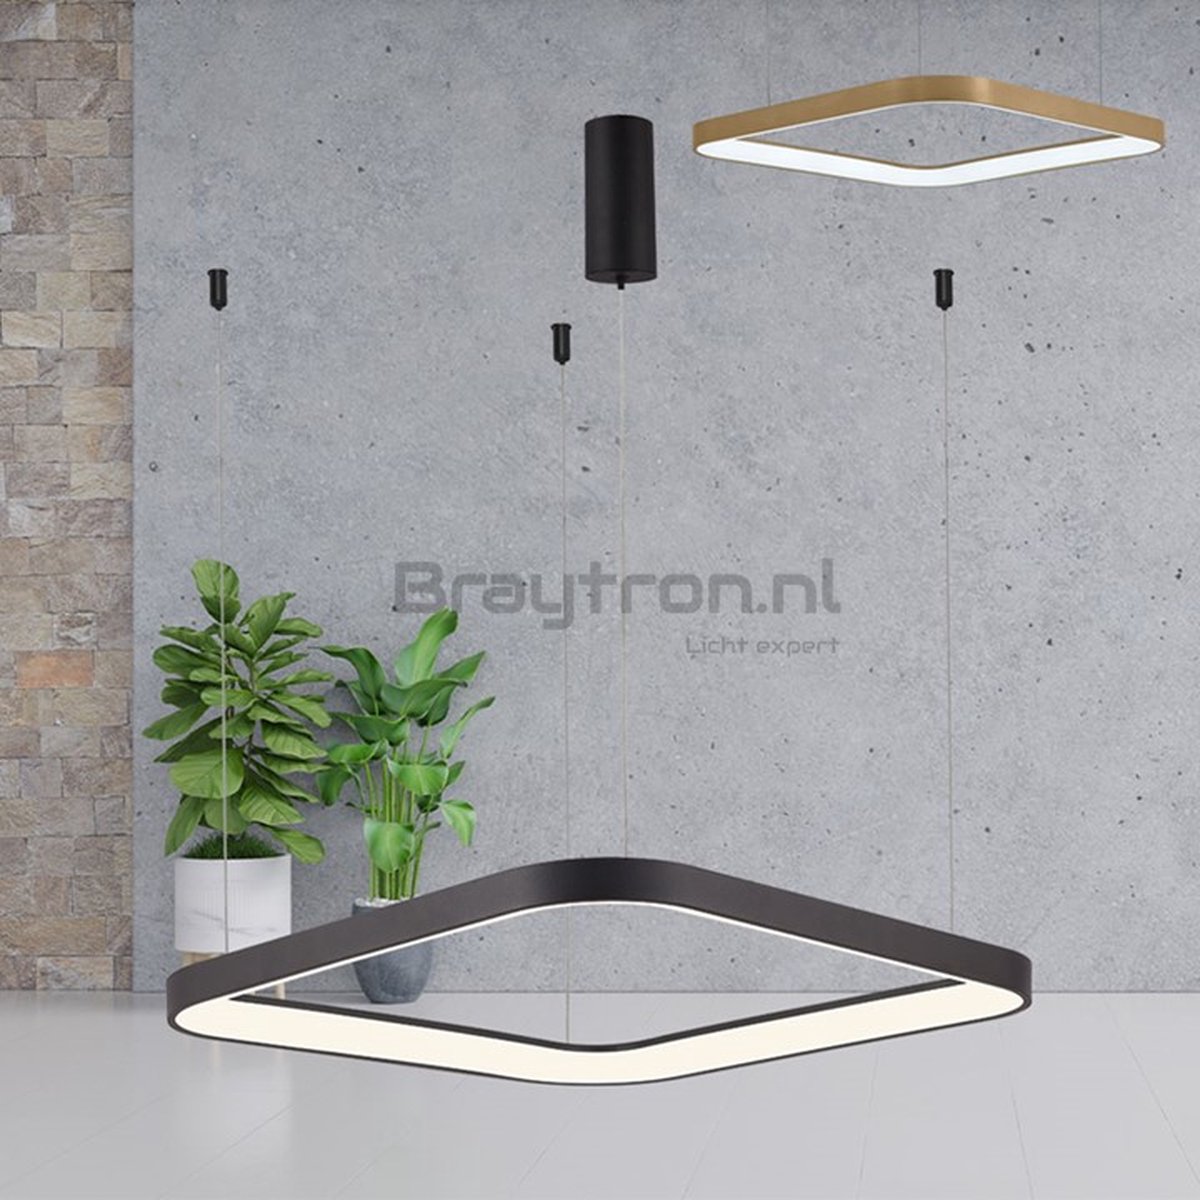 Braytron.nl | Decoratieve LED lamp BELLA | 58X58cm. | Zwarte vierkante led hanglamp | 46W | 3in1 wit kleuren licht | 3 jaar garantie.